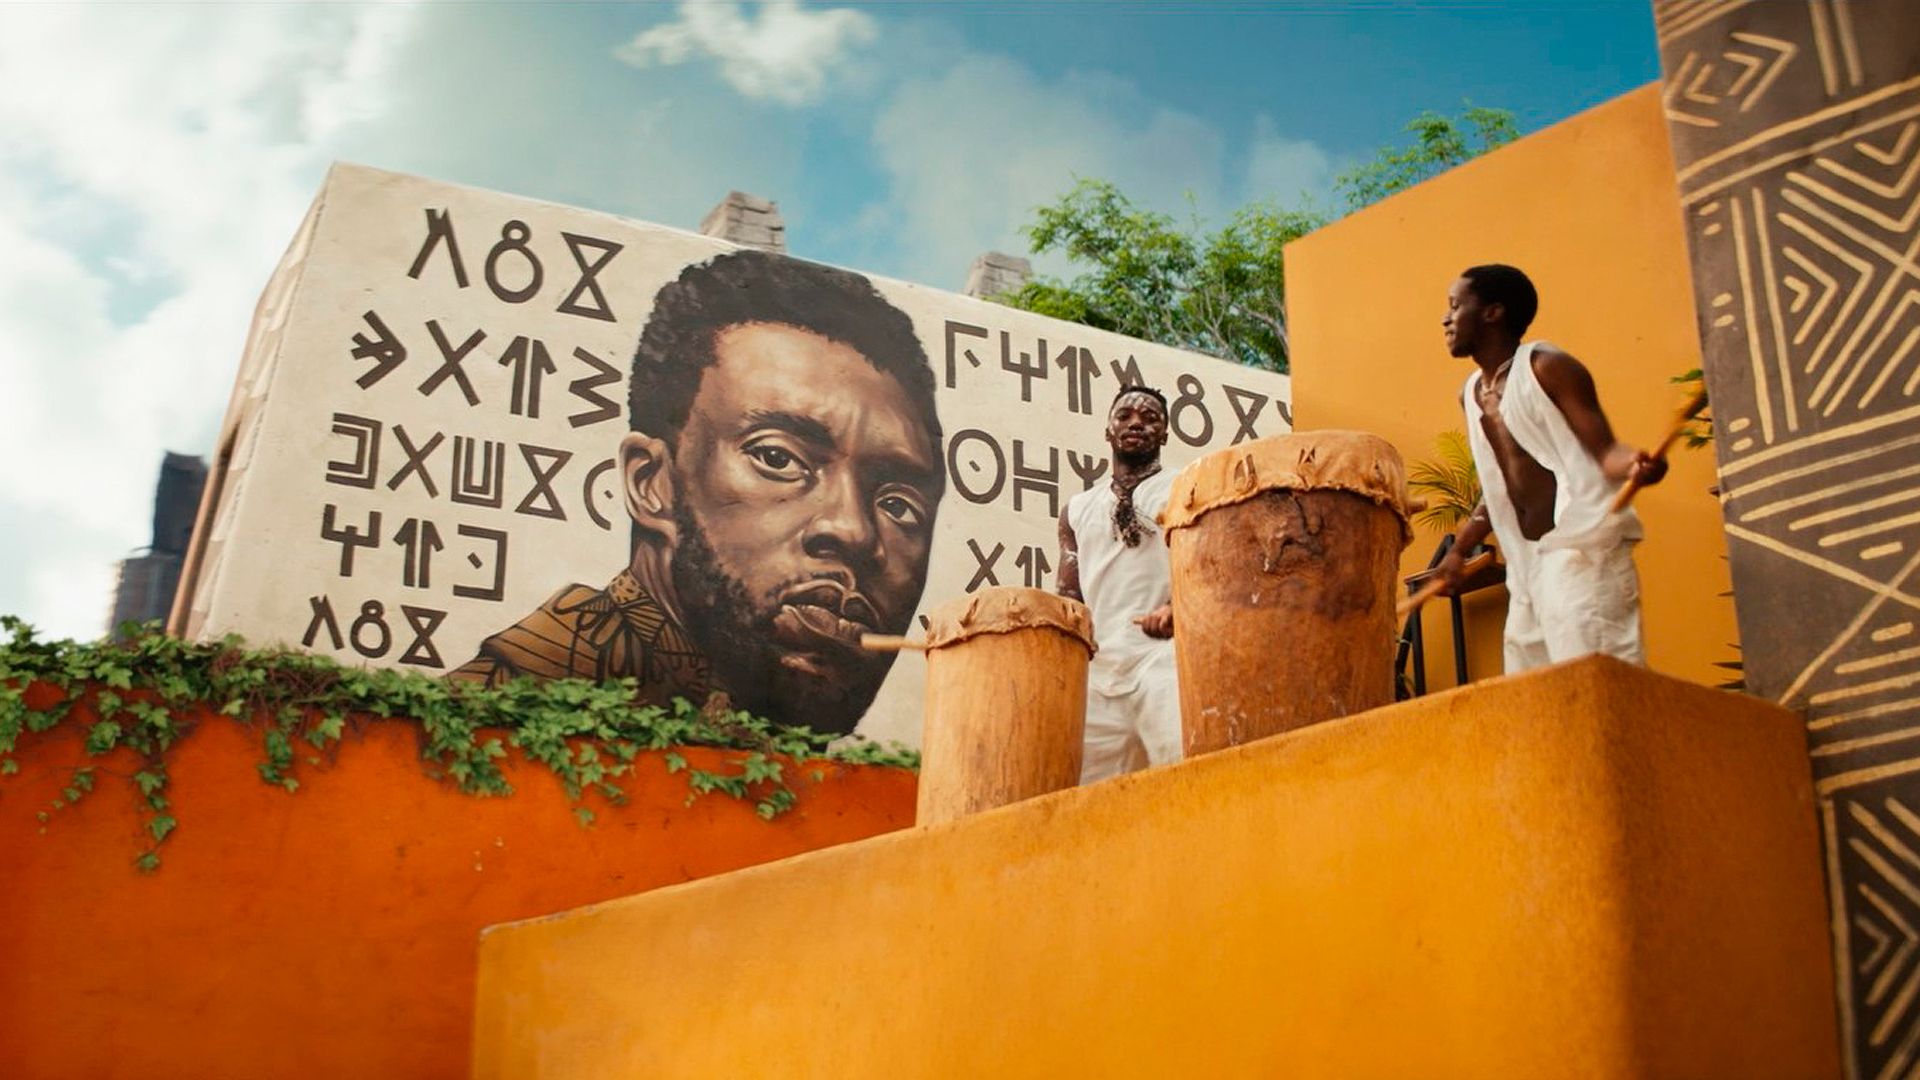 Black Panther 2: Wakanda Forever Releases Soundtrack: Listen